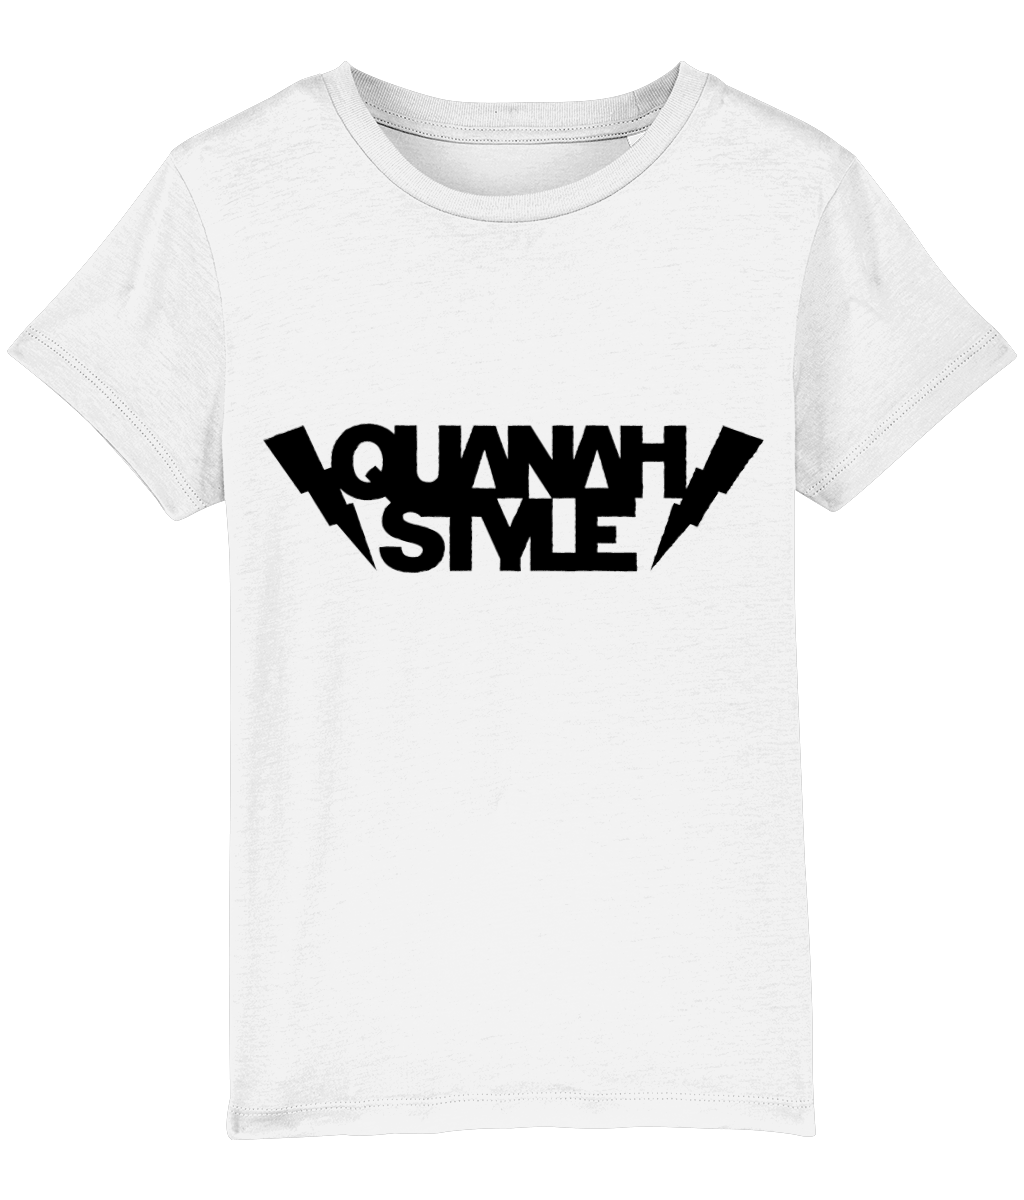 Quanah Style - Black Logo Kids T-Shirt - SNATCHED MERCH